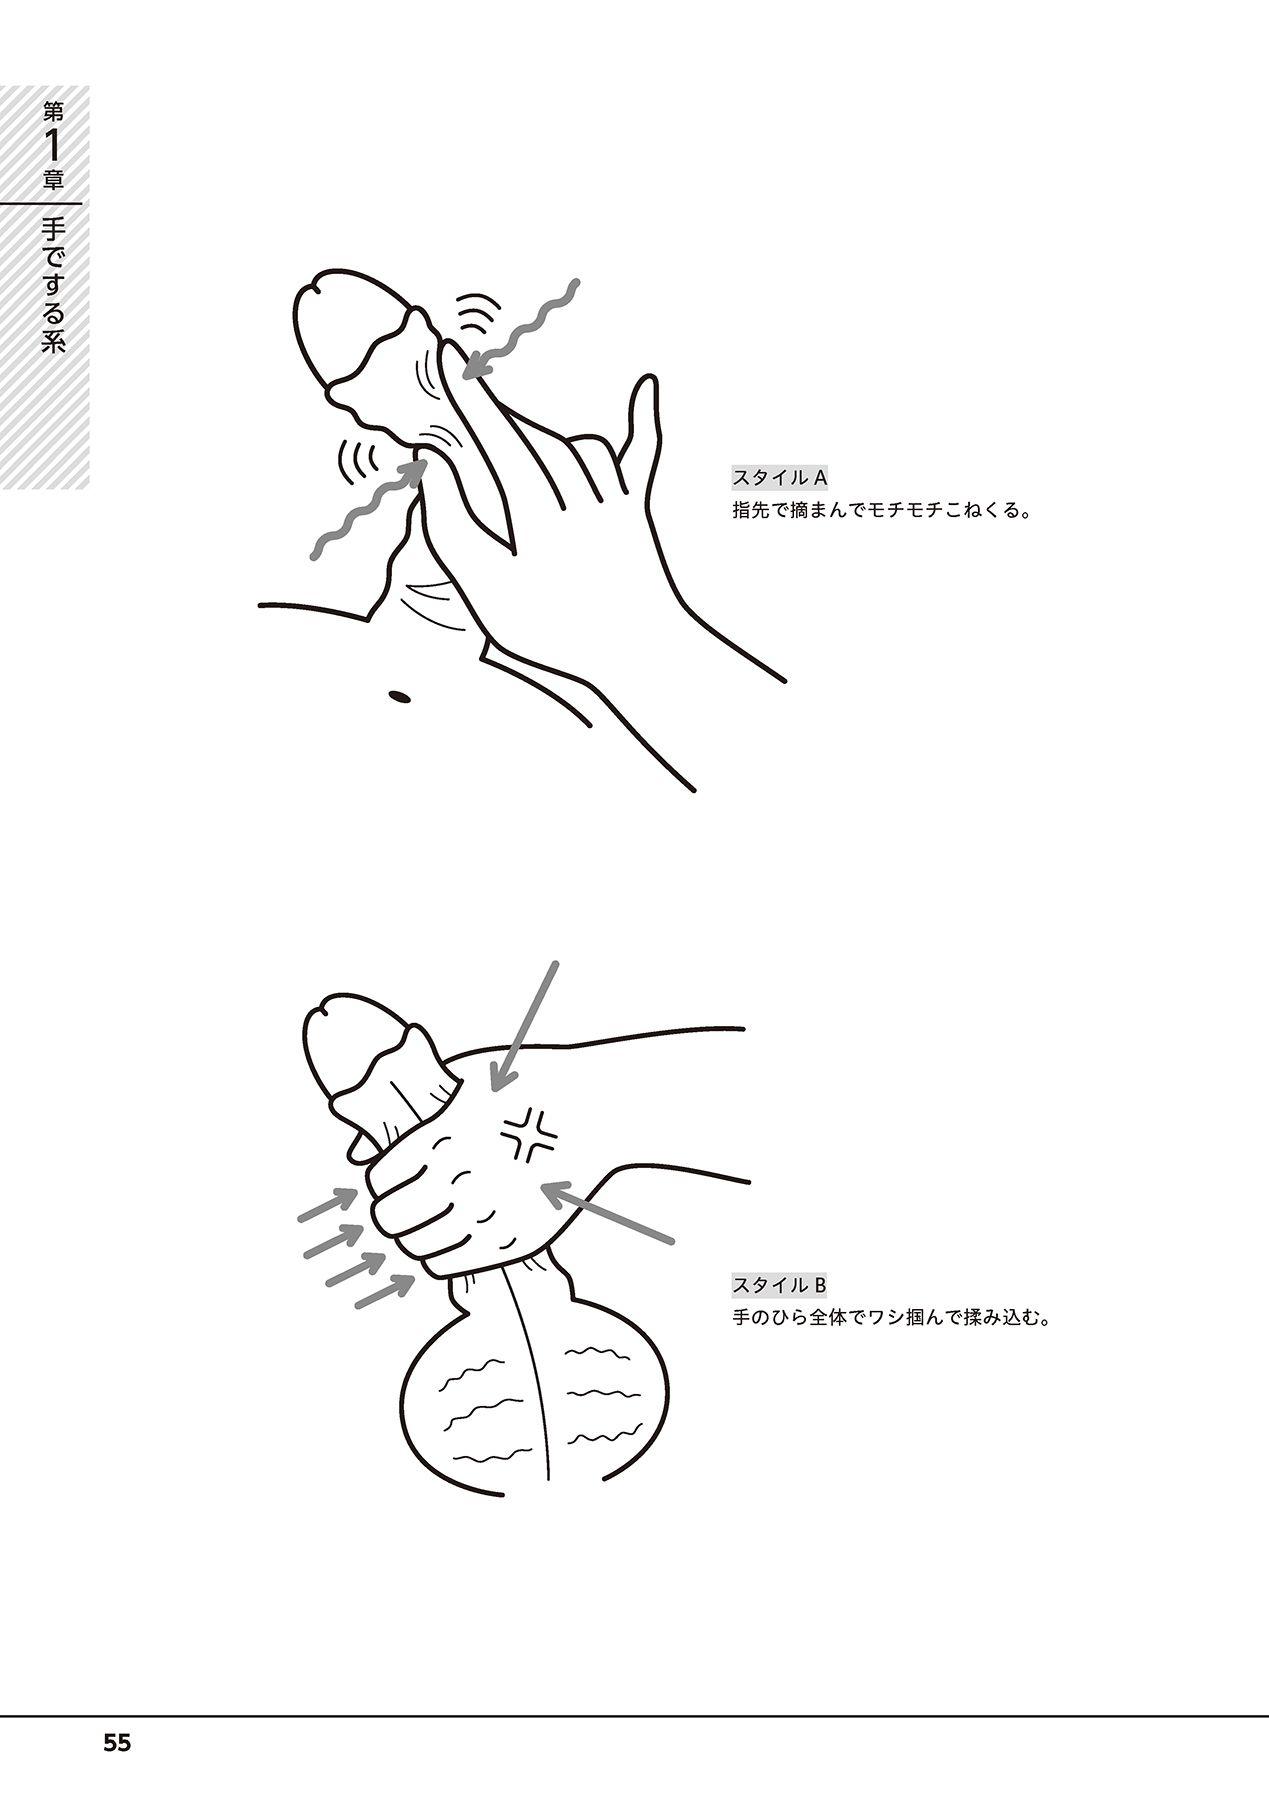 Otoko no Jii Onanie Kanzen Manual Illustration Han...... Onanie Play 56